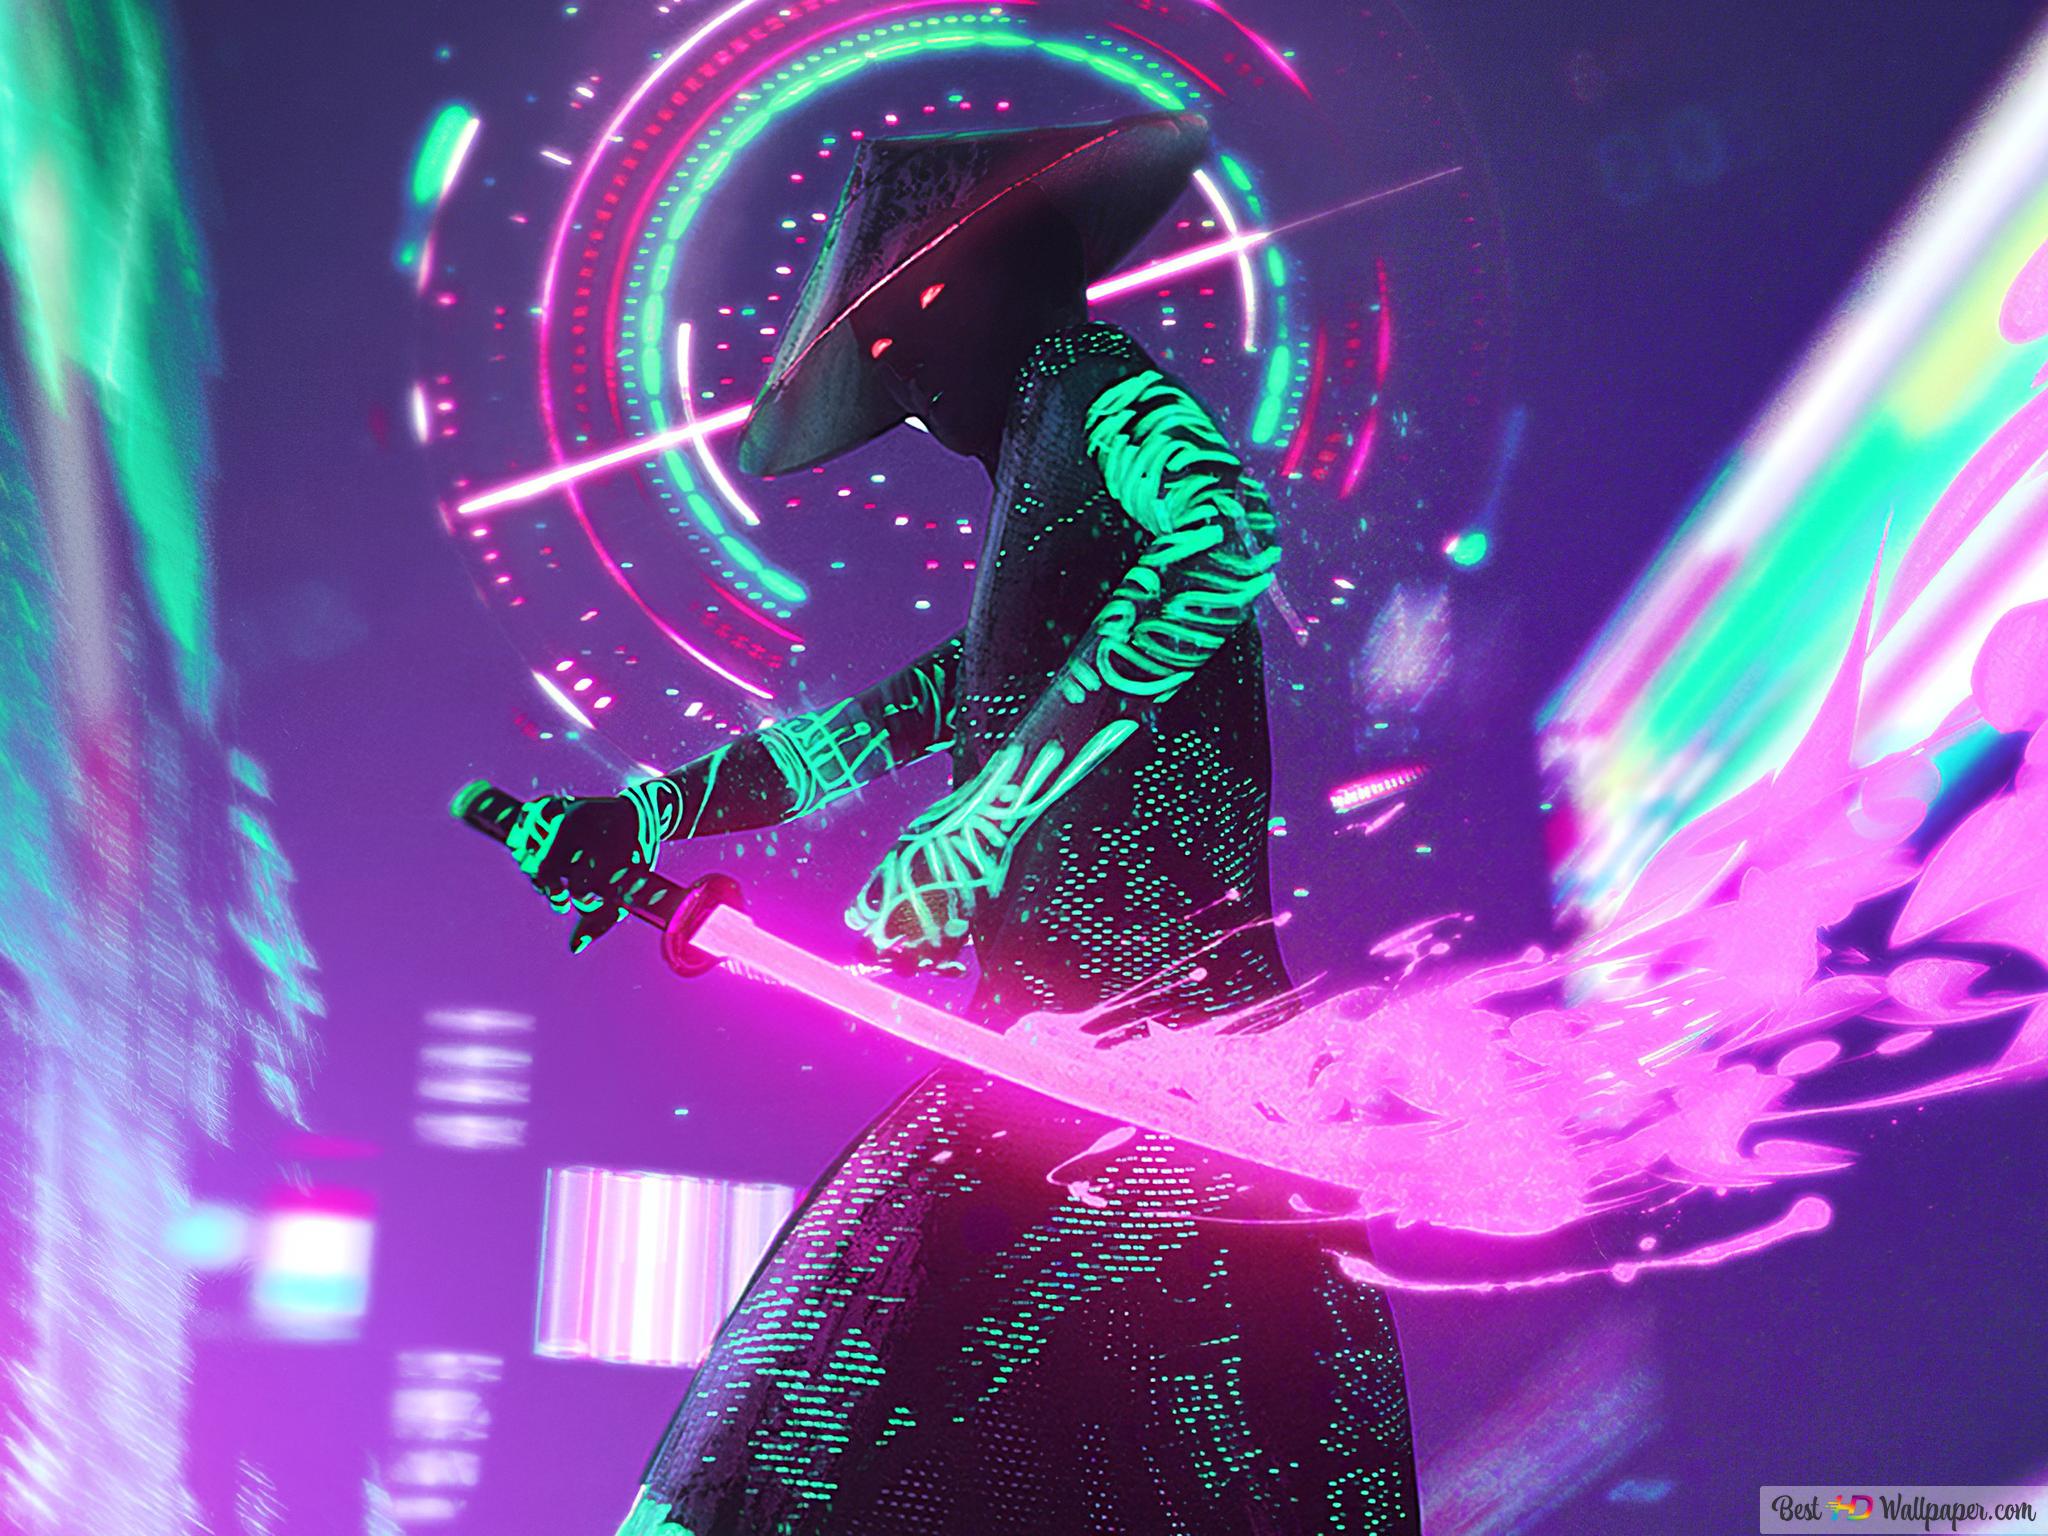 3D wallpaper of a neon warrior in a futuristic city - Cyberpunk